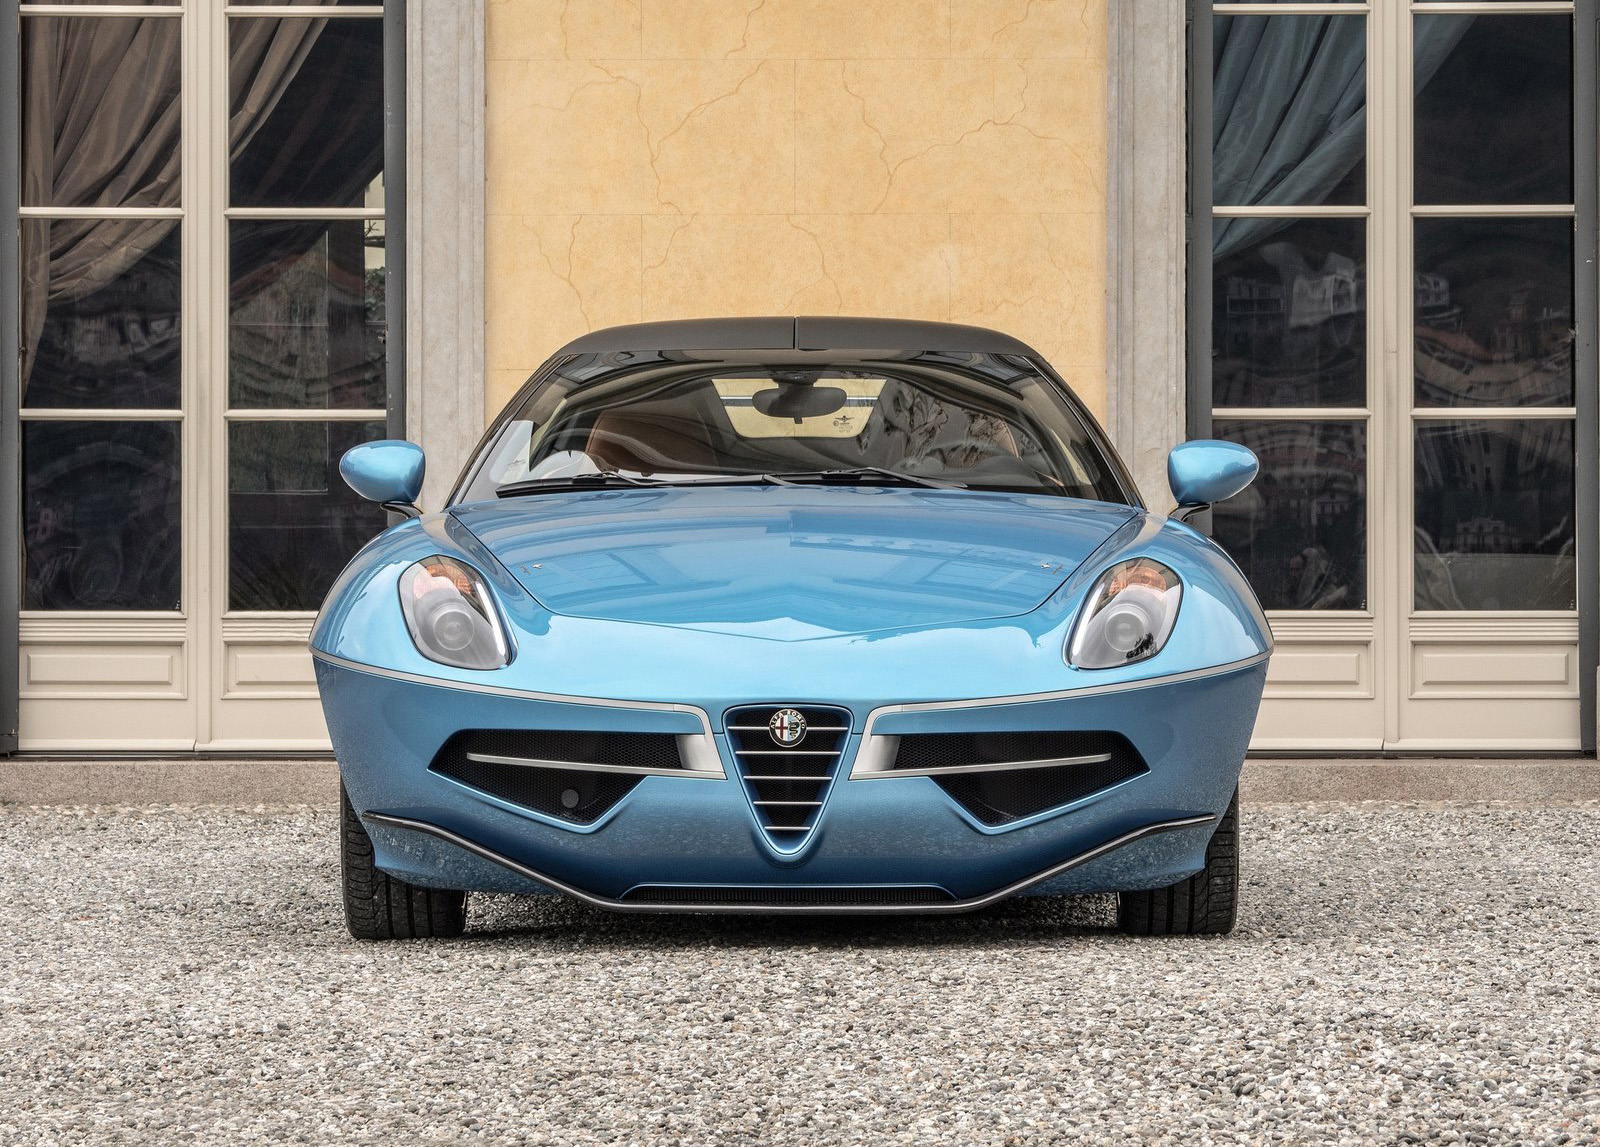 2016 Alfa Romeo Disco Volante Touring News and